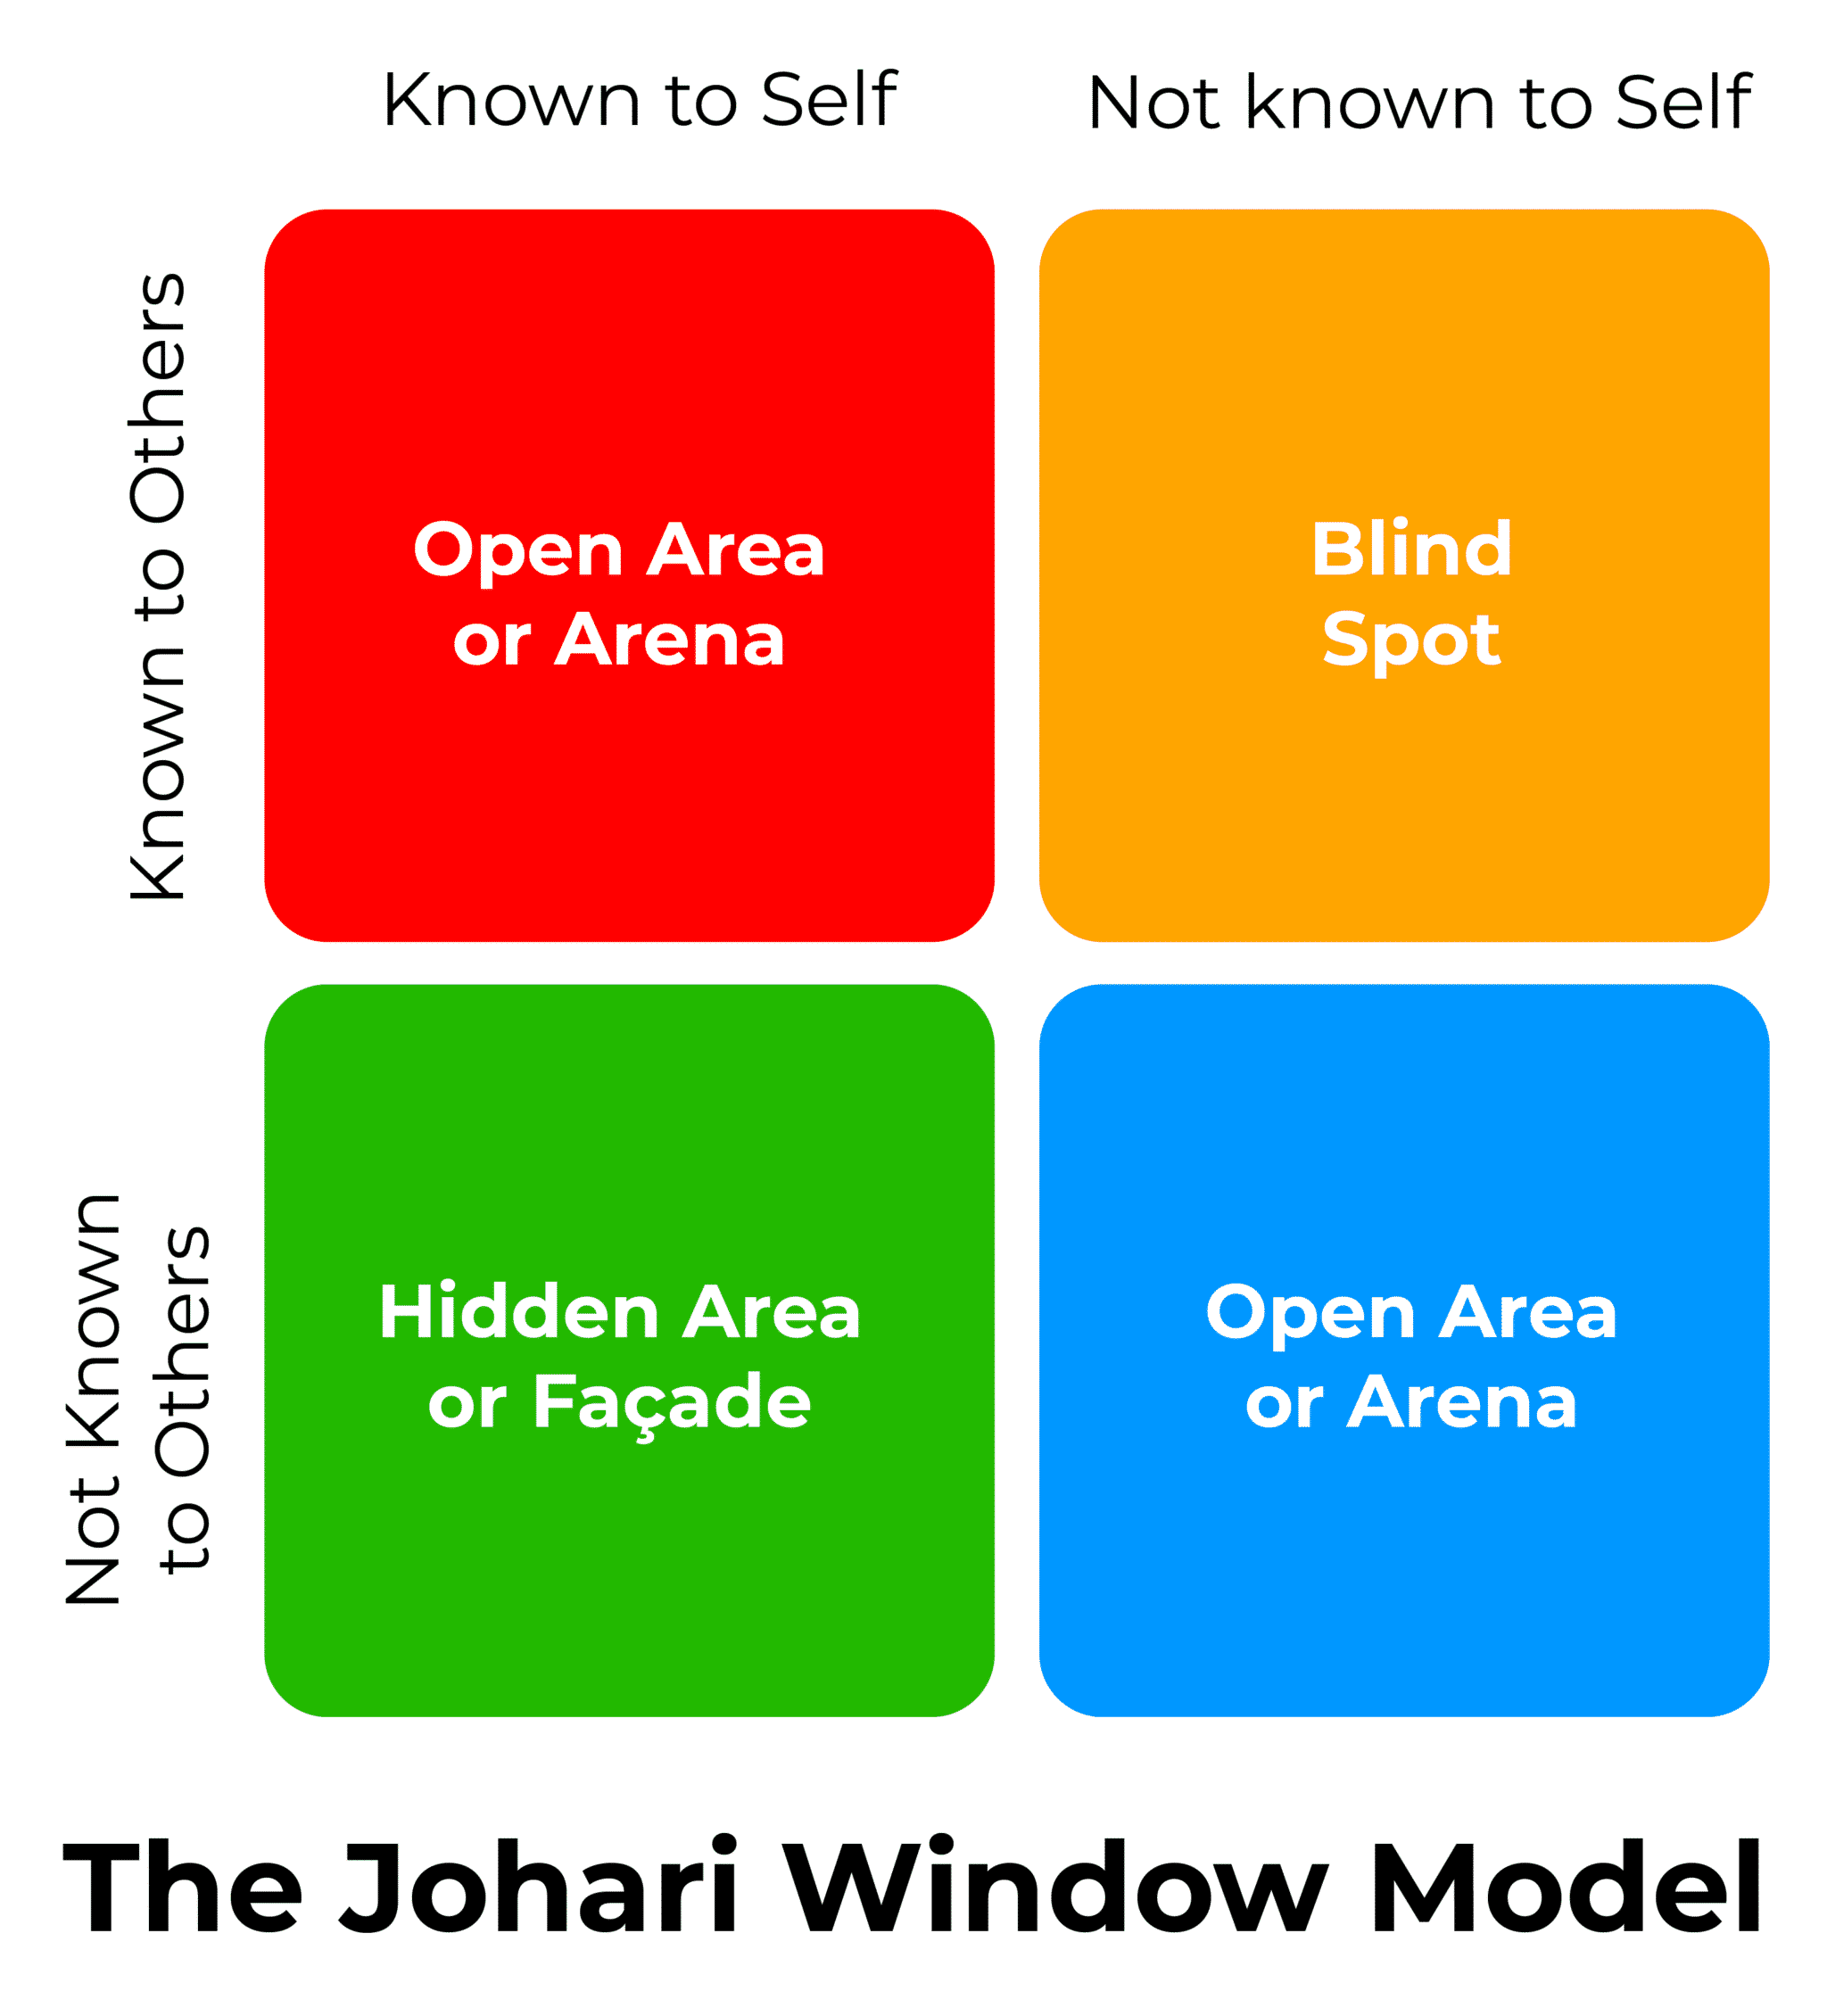 THE JOHARI WINDOW MODEL